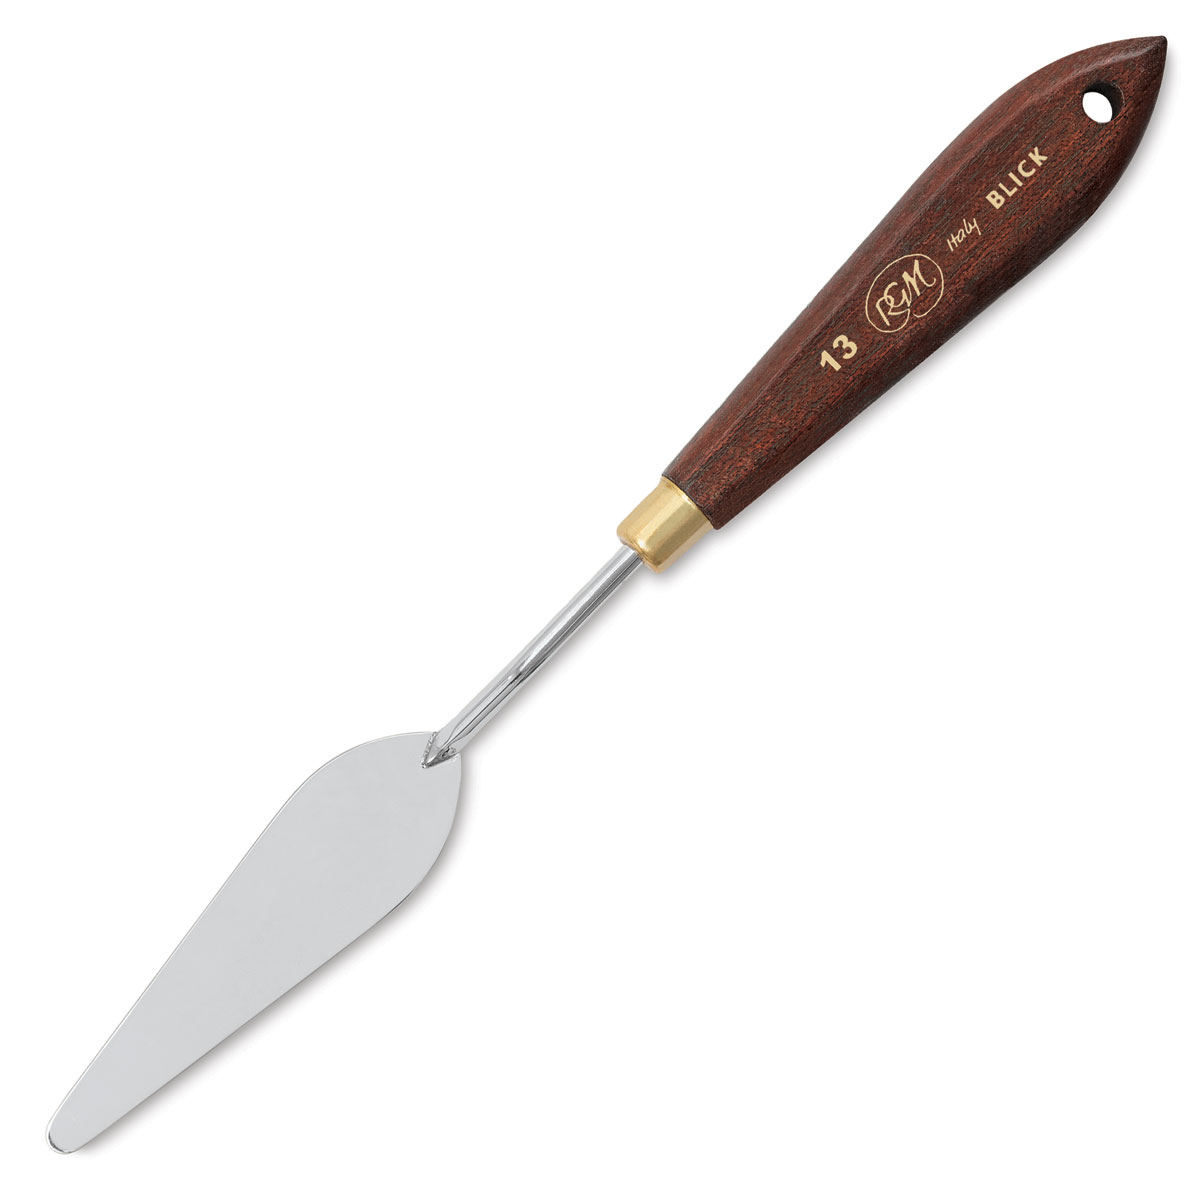 Blick Painting Knife - Medium Long Trowel, 13